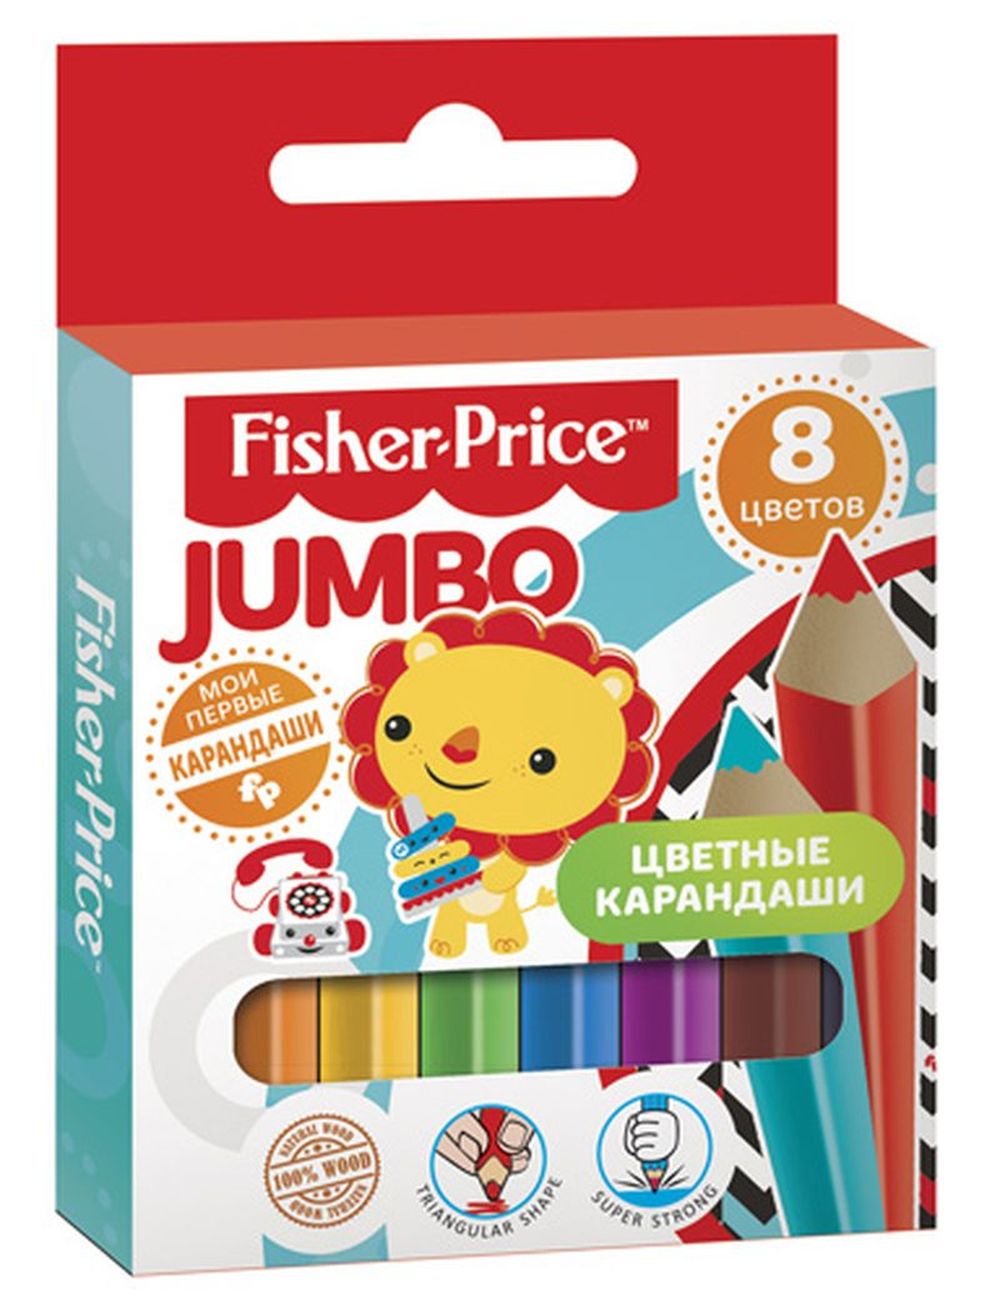 Mattel Набор цветных карандашей Mini Jumbo Mattel Fisher Price 8 цветов